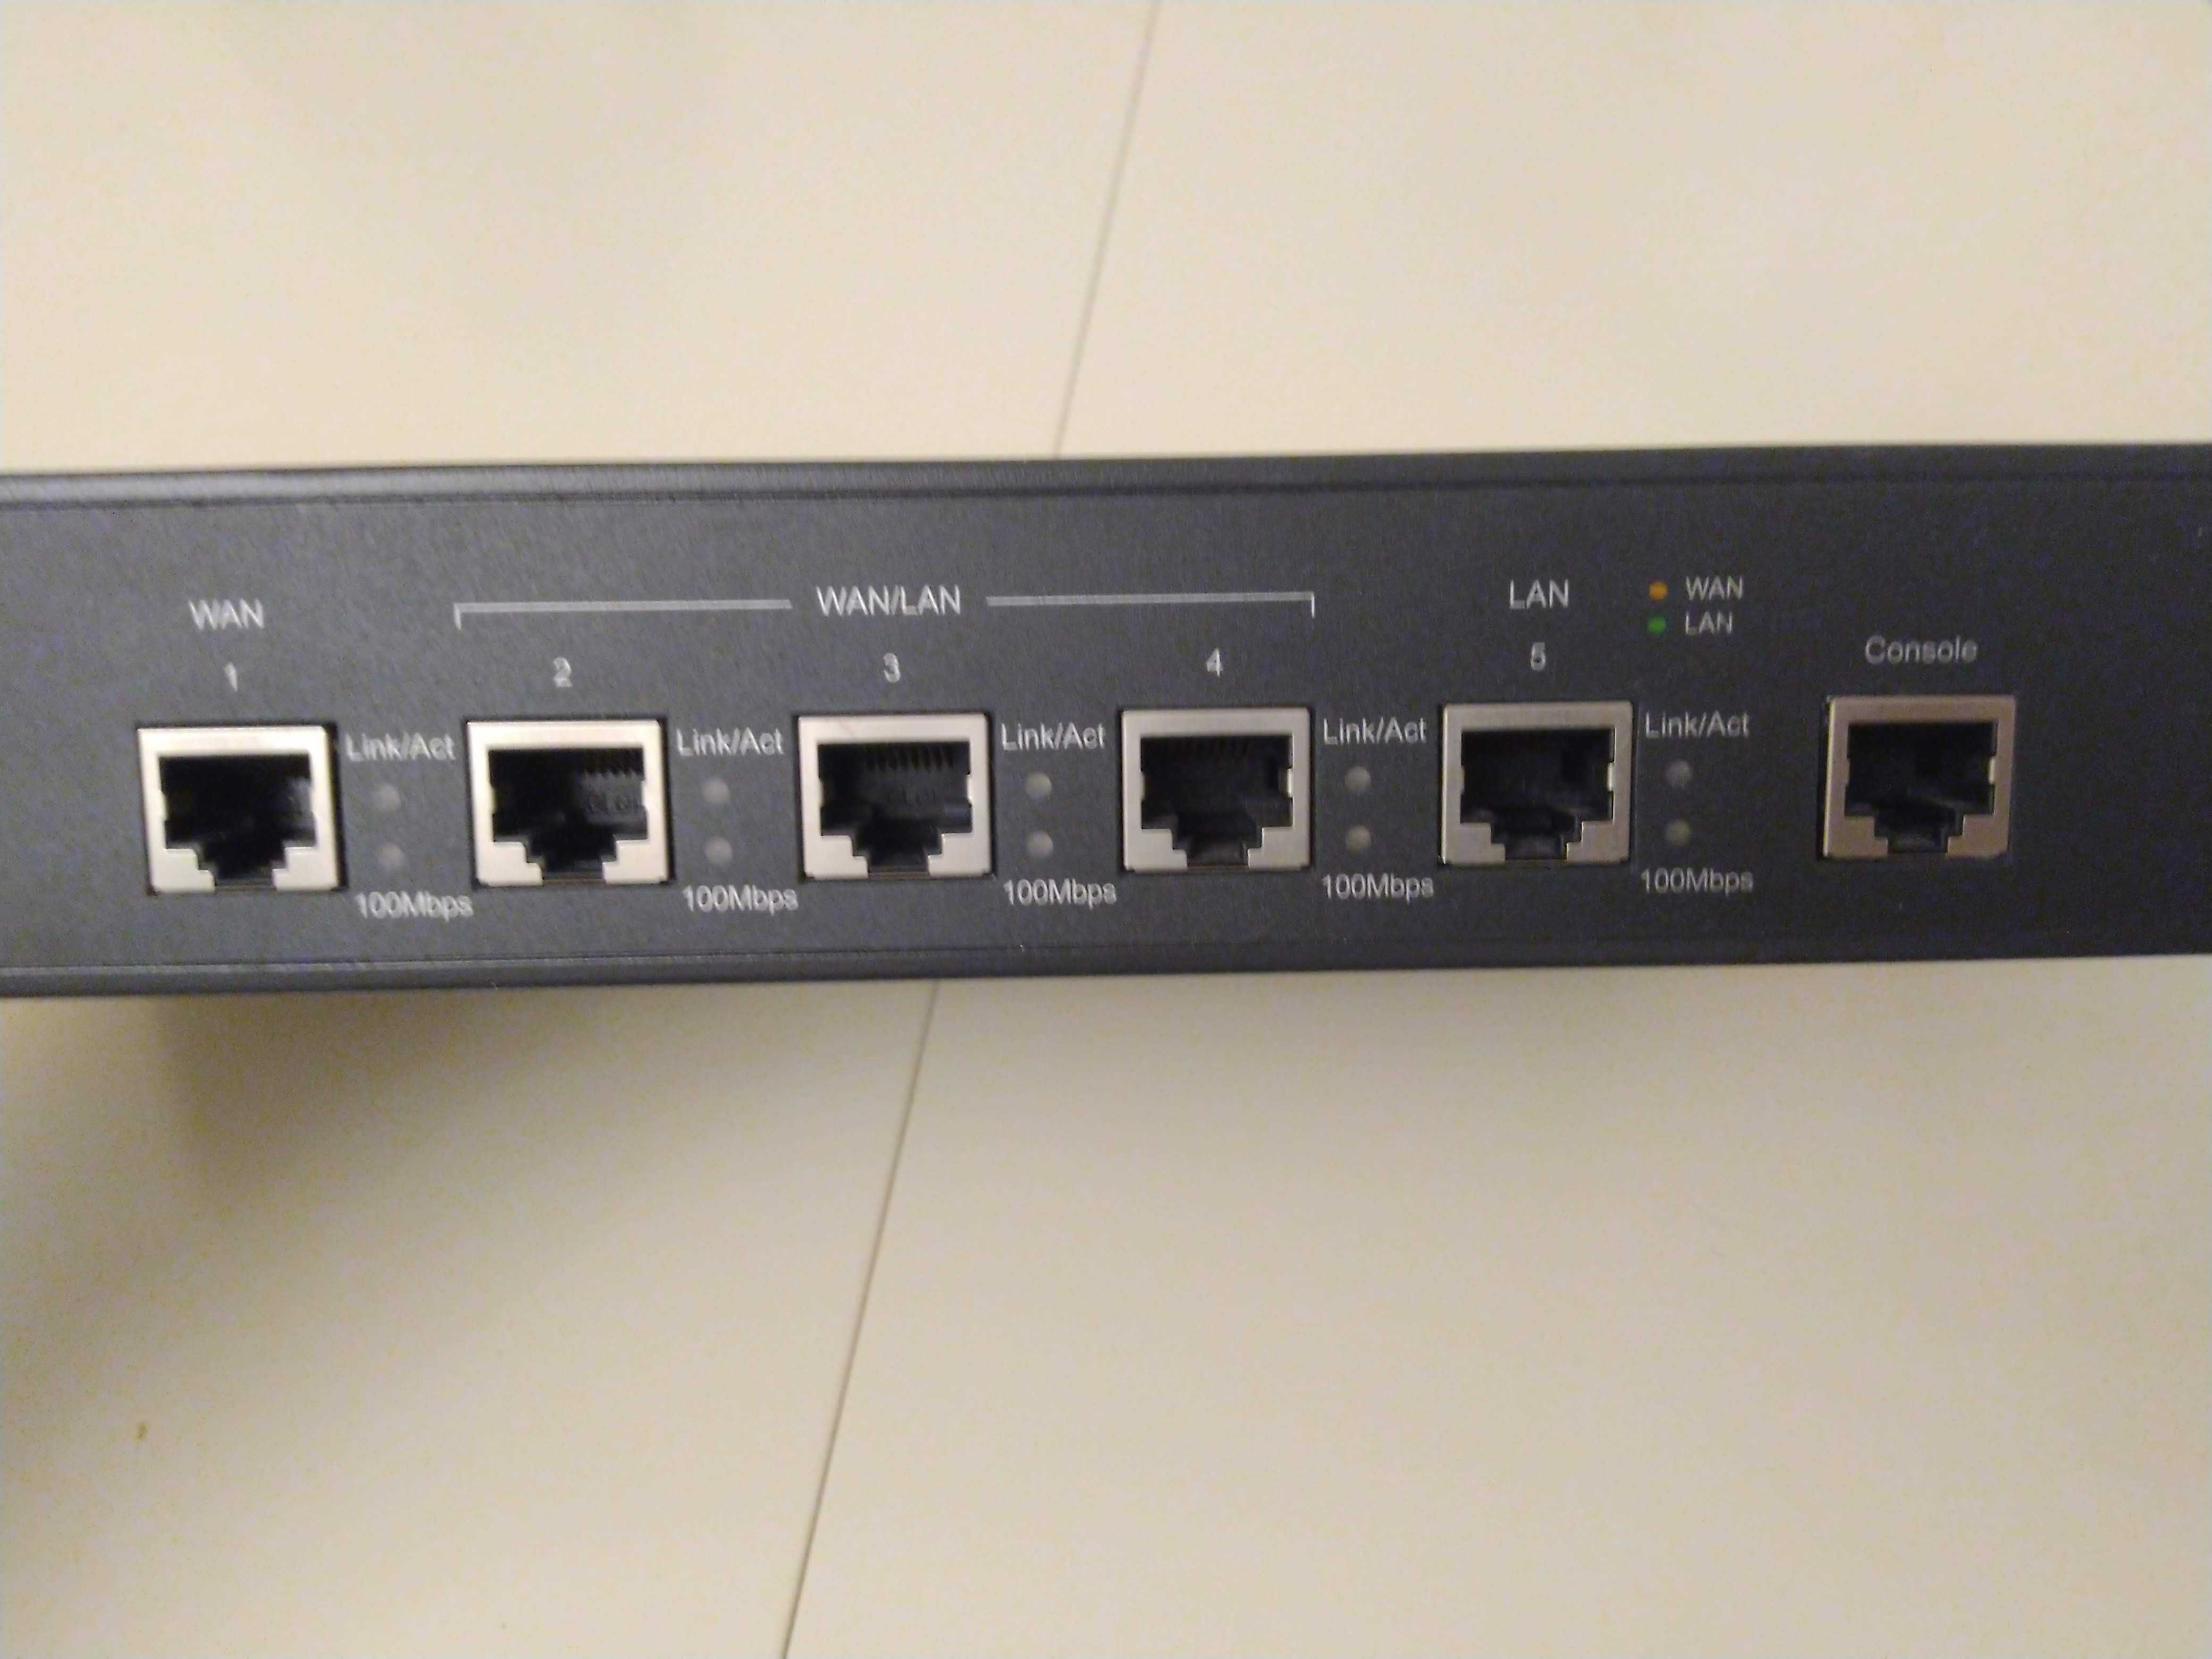 Router TP-LINK TL-R480T+